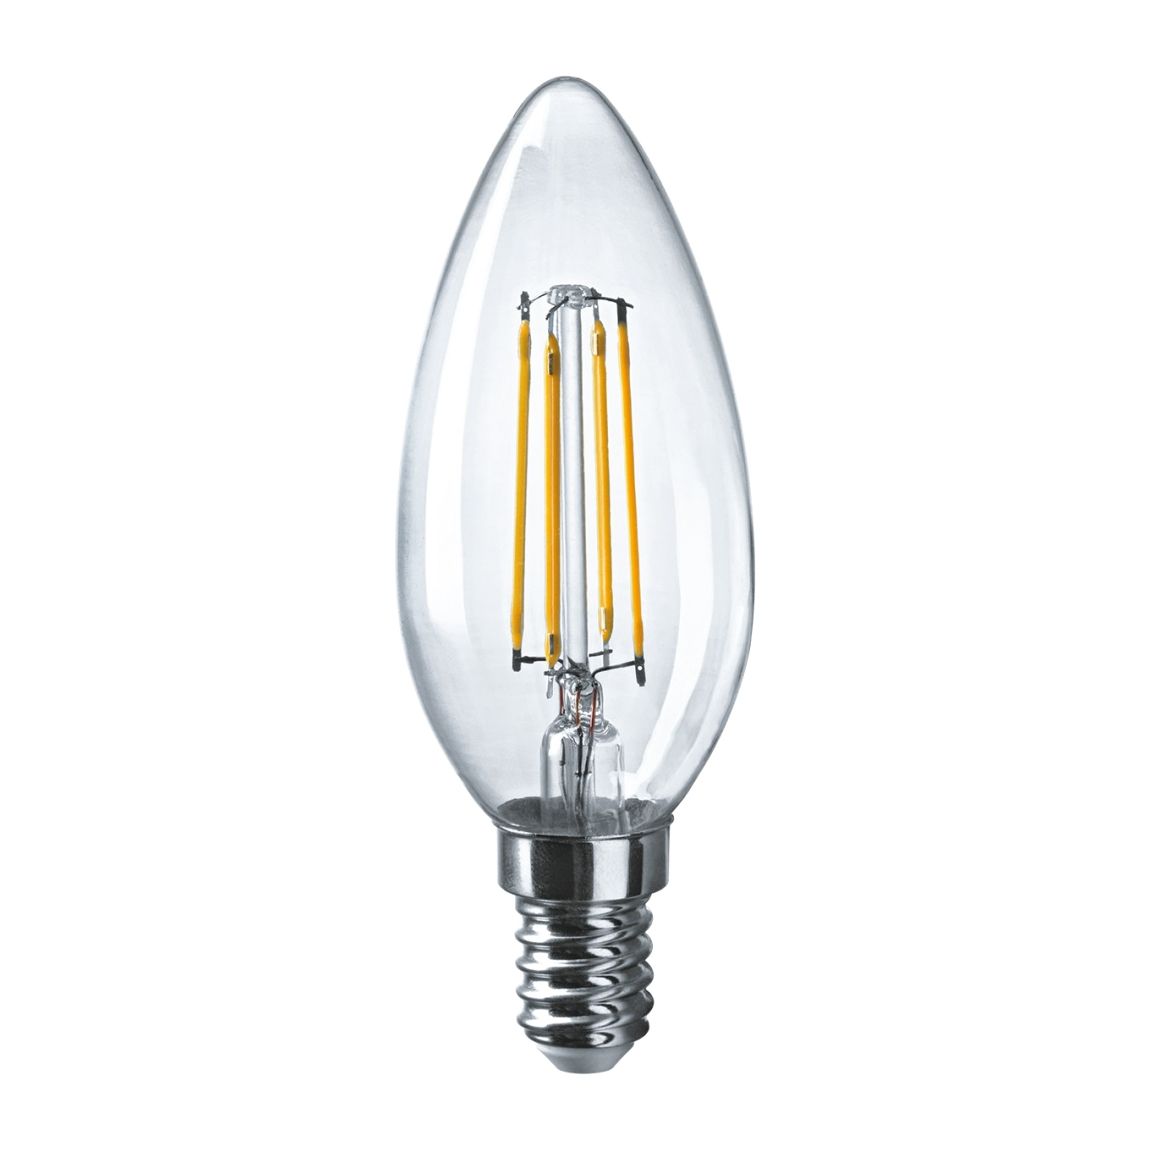 Лампа Navigator filament свеча 6вт e14 тепл. лампа светодиодная philips е14 2700к теплый белый свет свеча 6 вт